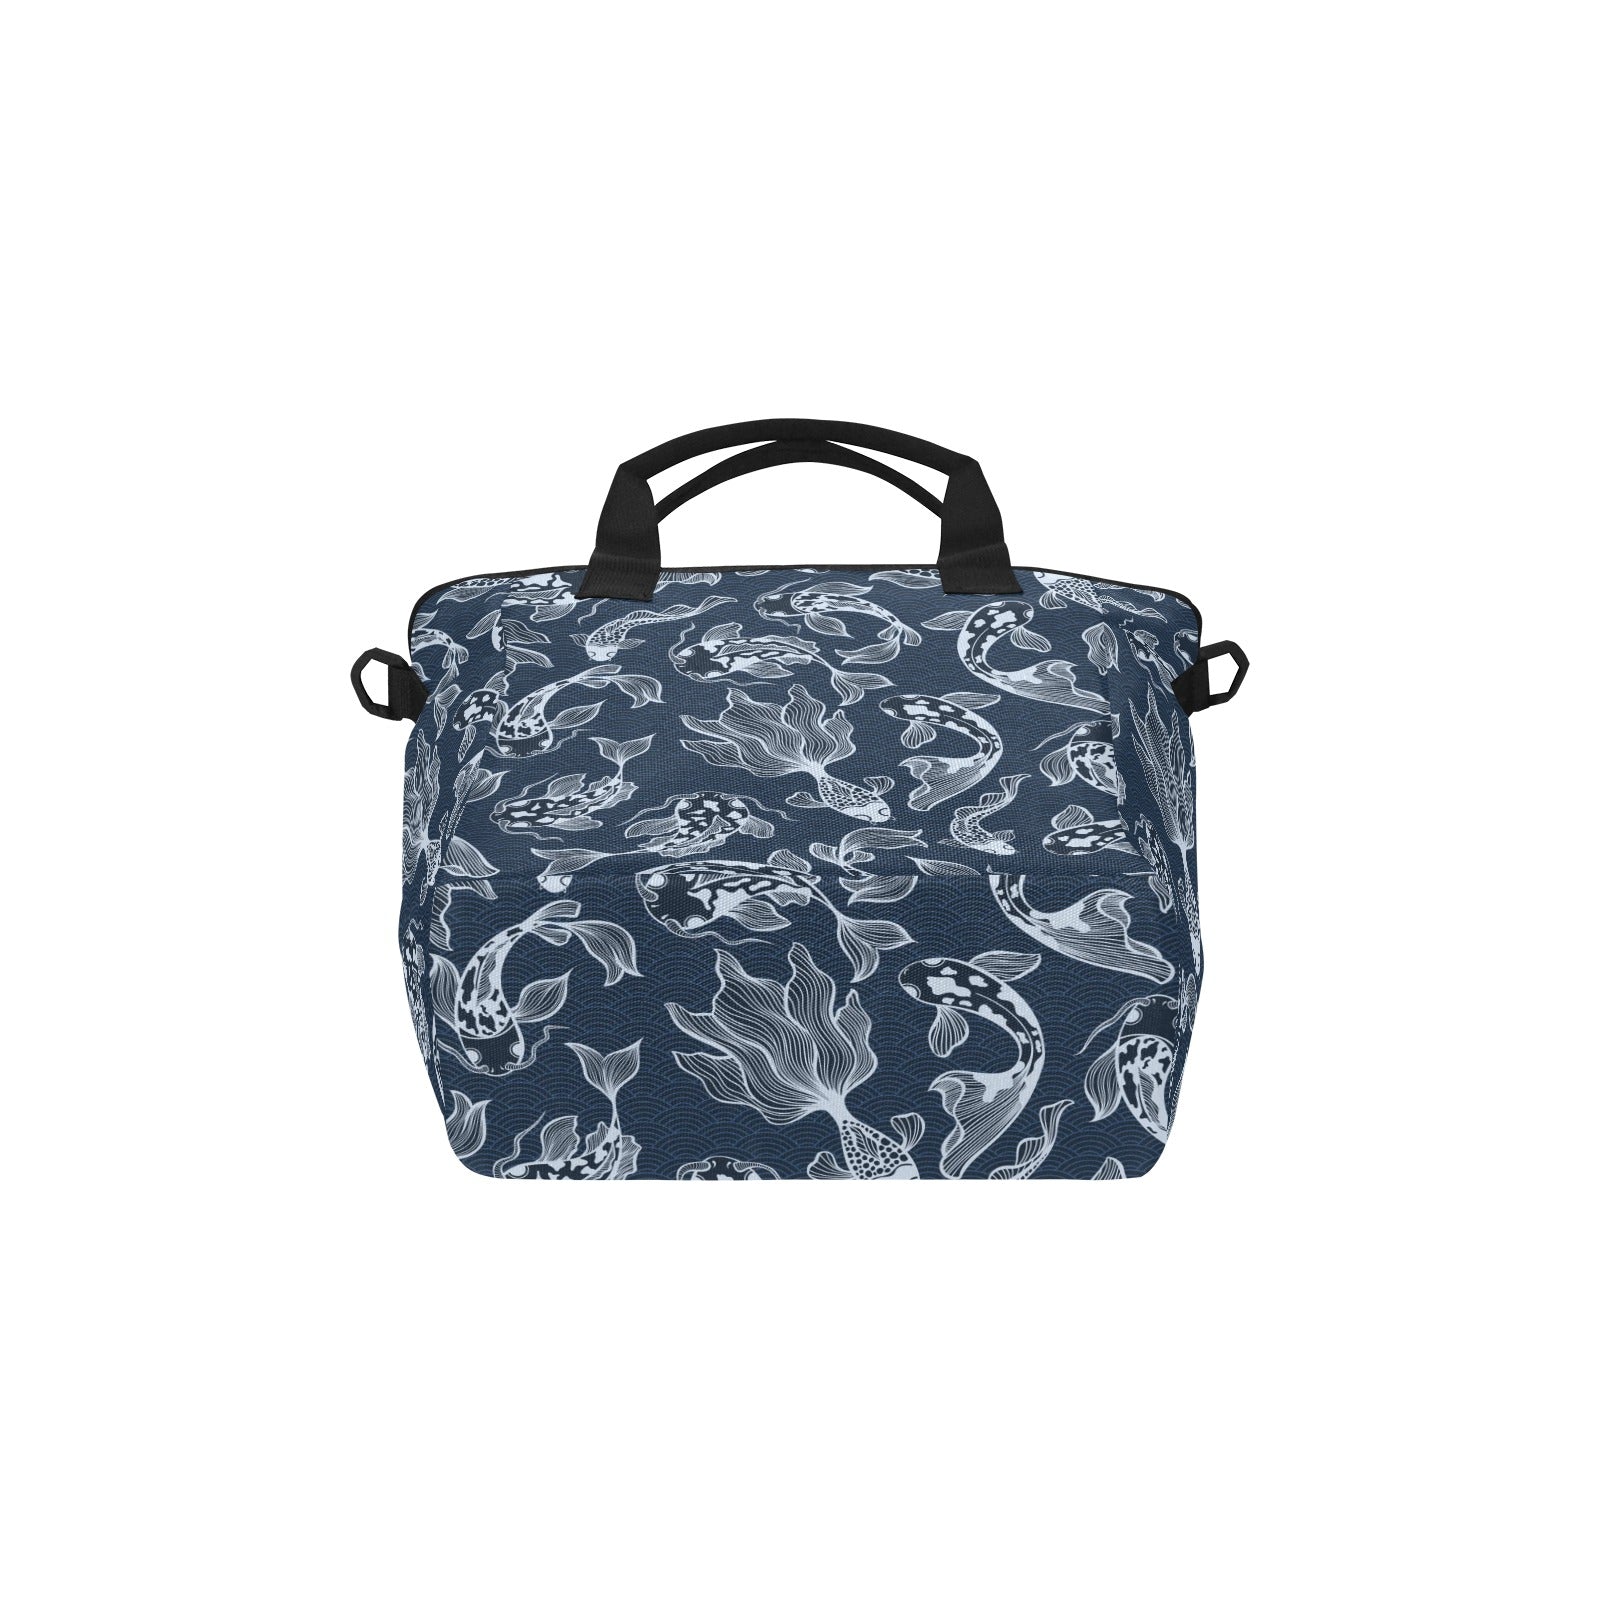 Blue Fish - Tote Bag with Shoulder Strap Nylon Tote Bag